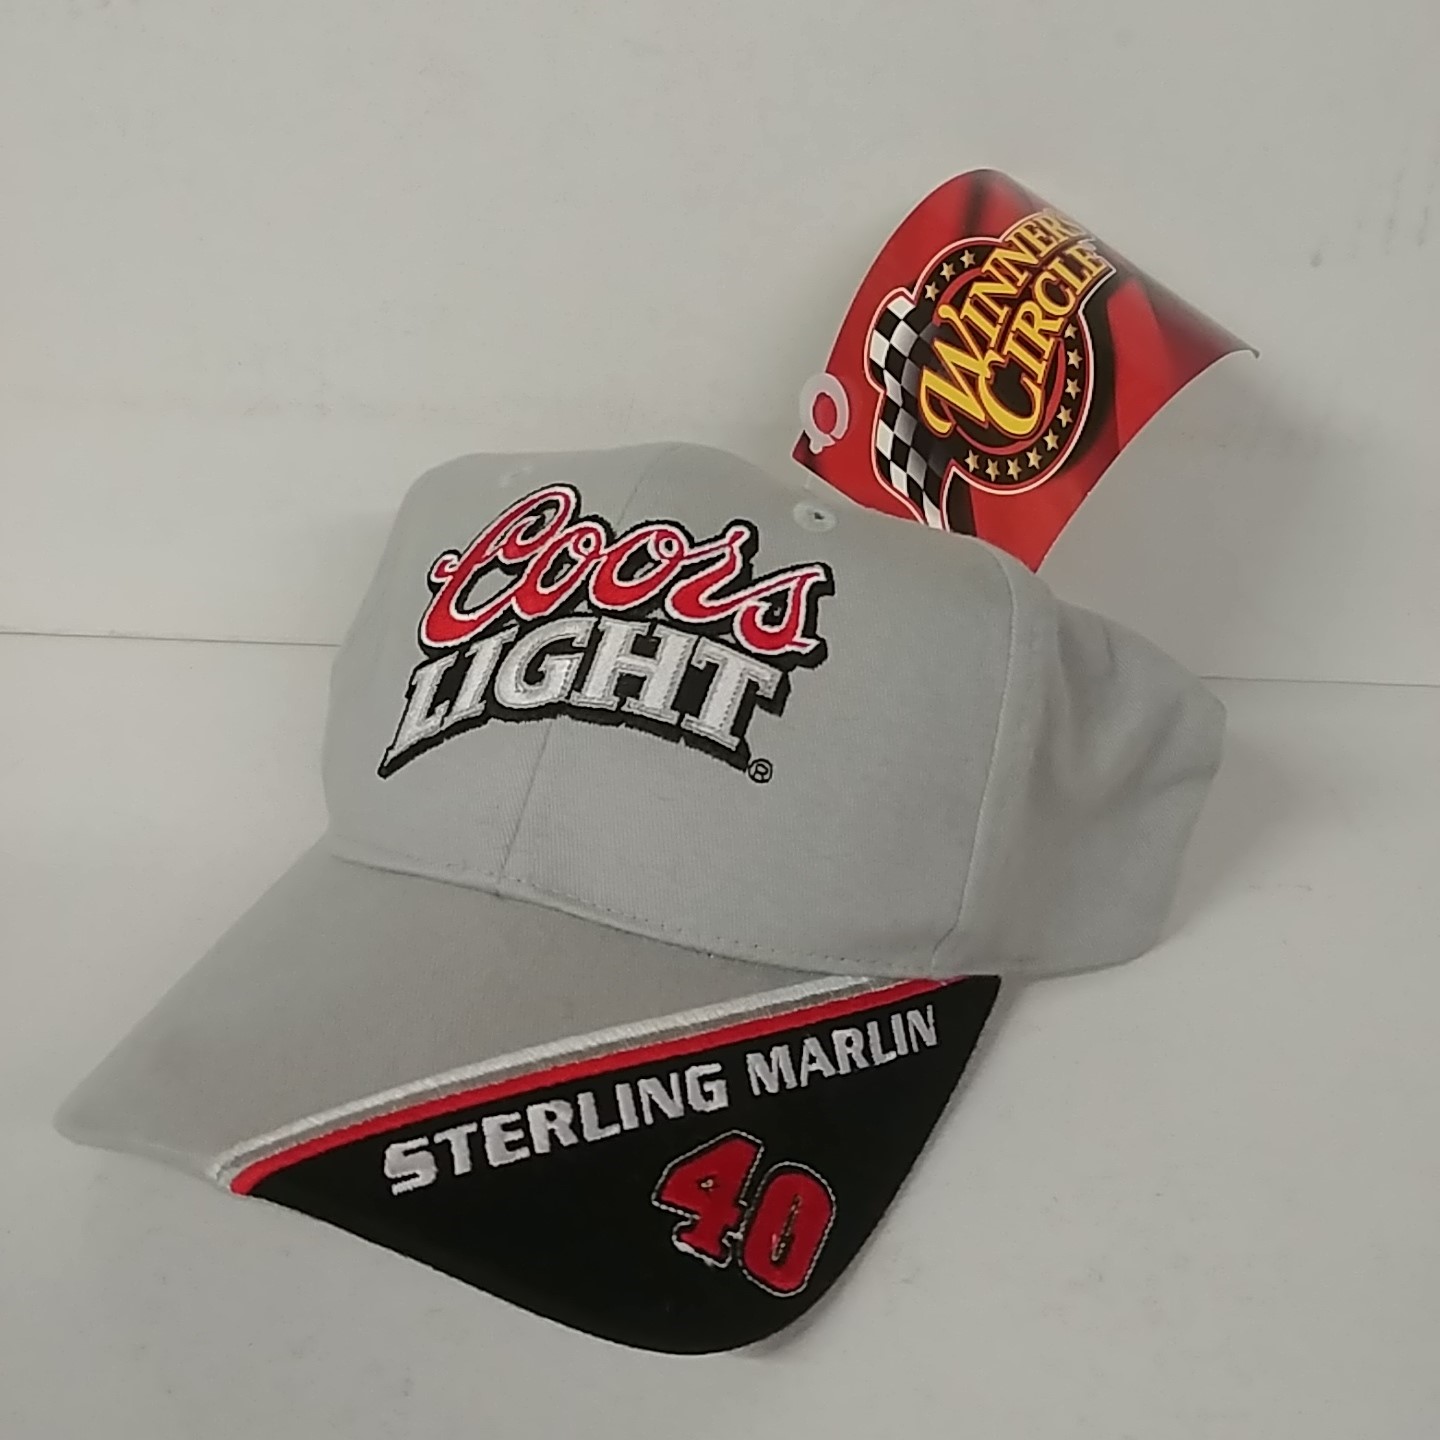 2002 Sterling Marlin Coors Light "Comering" hat